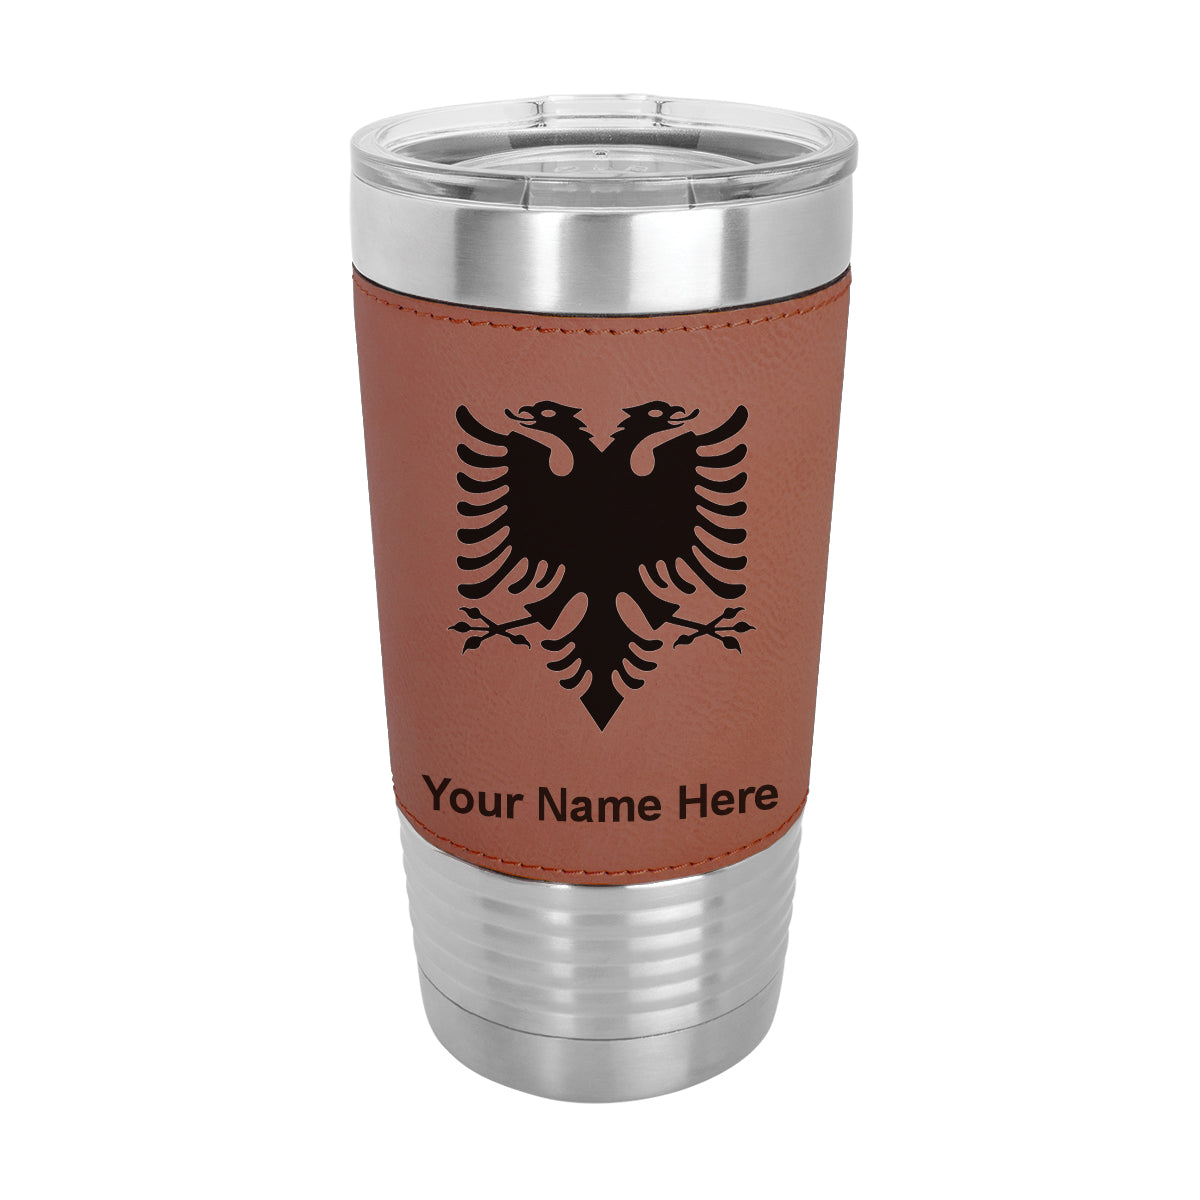 20oz Faux Leather Tumbler Mug, Flag of Albania, Personalized Engraving Included - LaserGram Custom Engraved Gifts